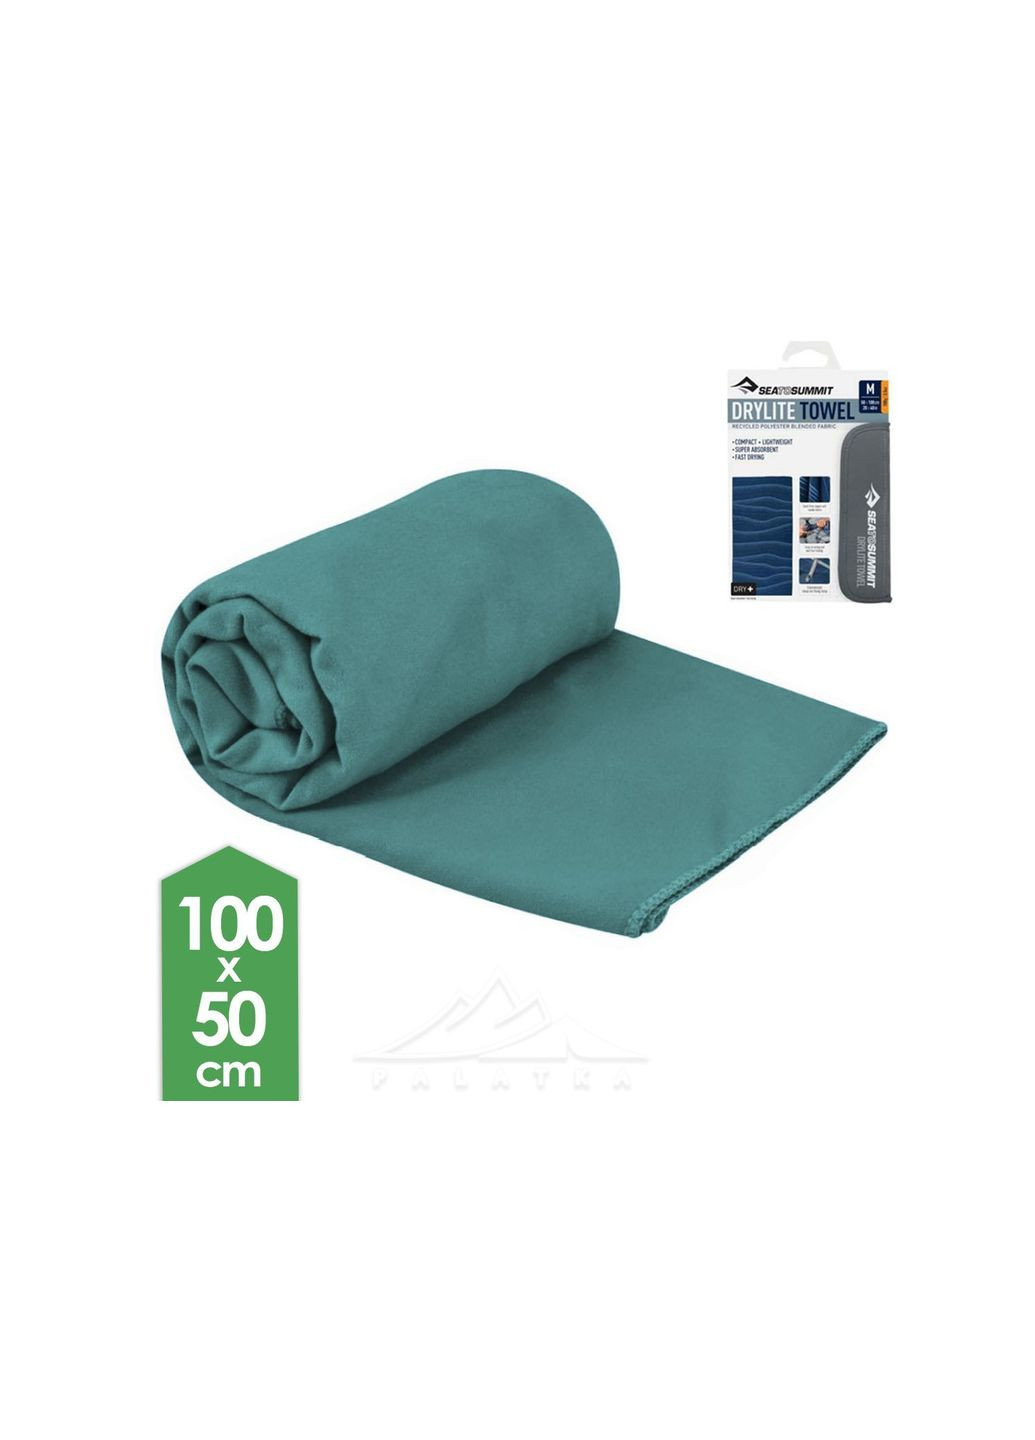 Sea To Summit полотенце drylite towel m бирюзовый производство -